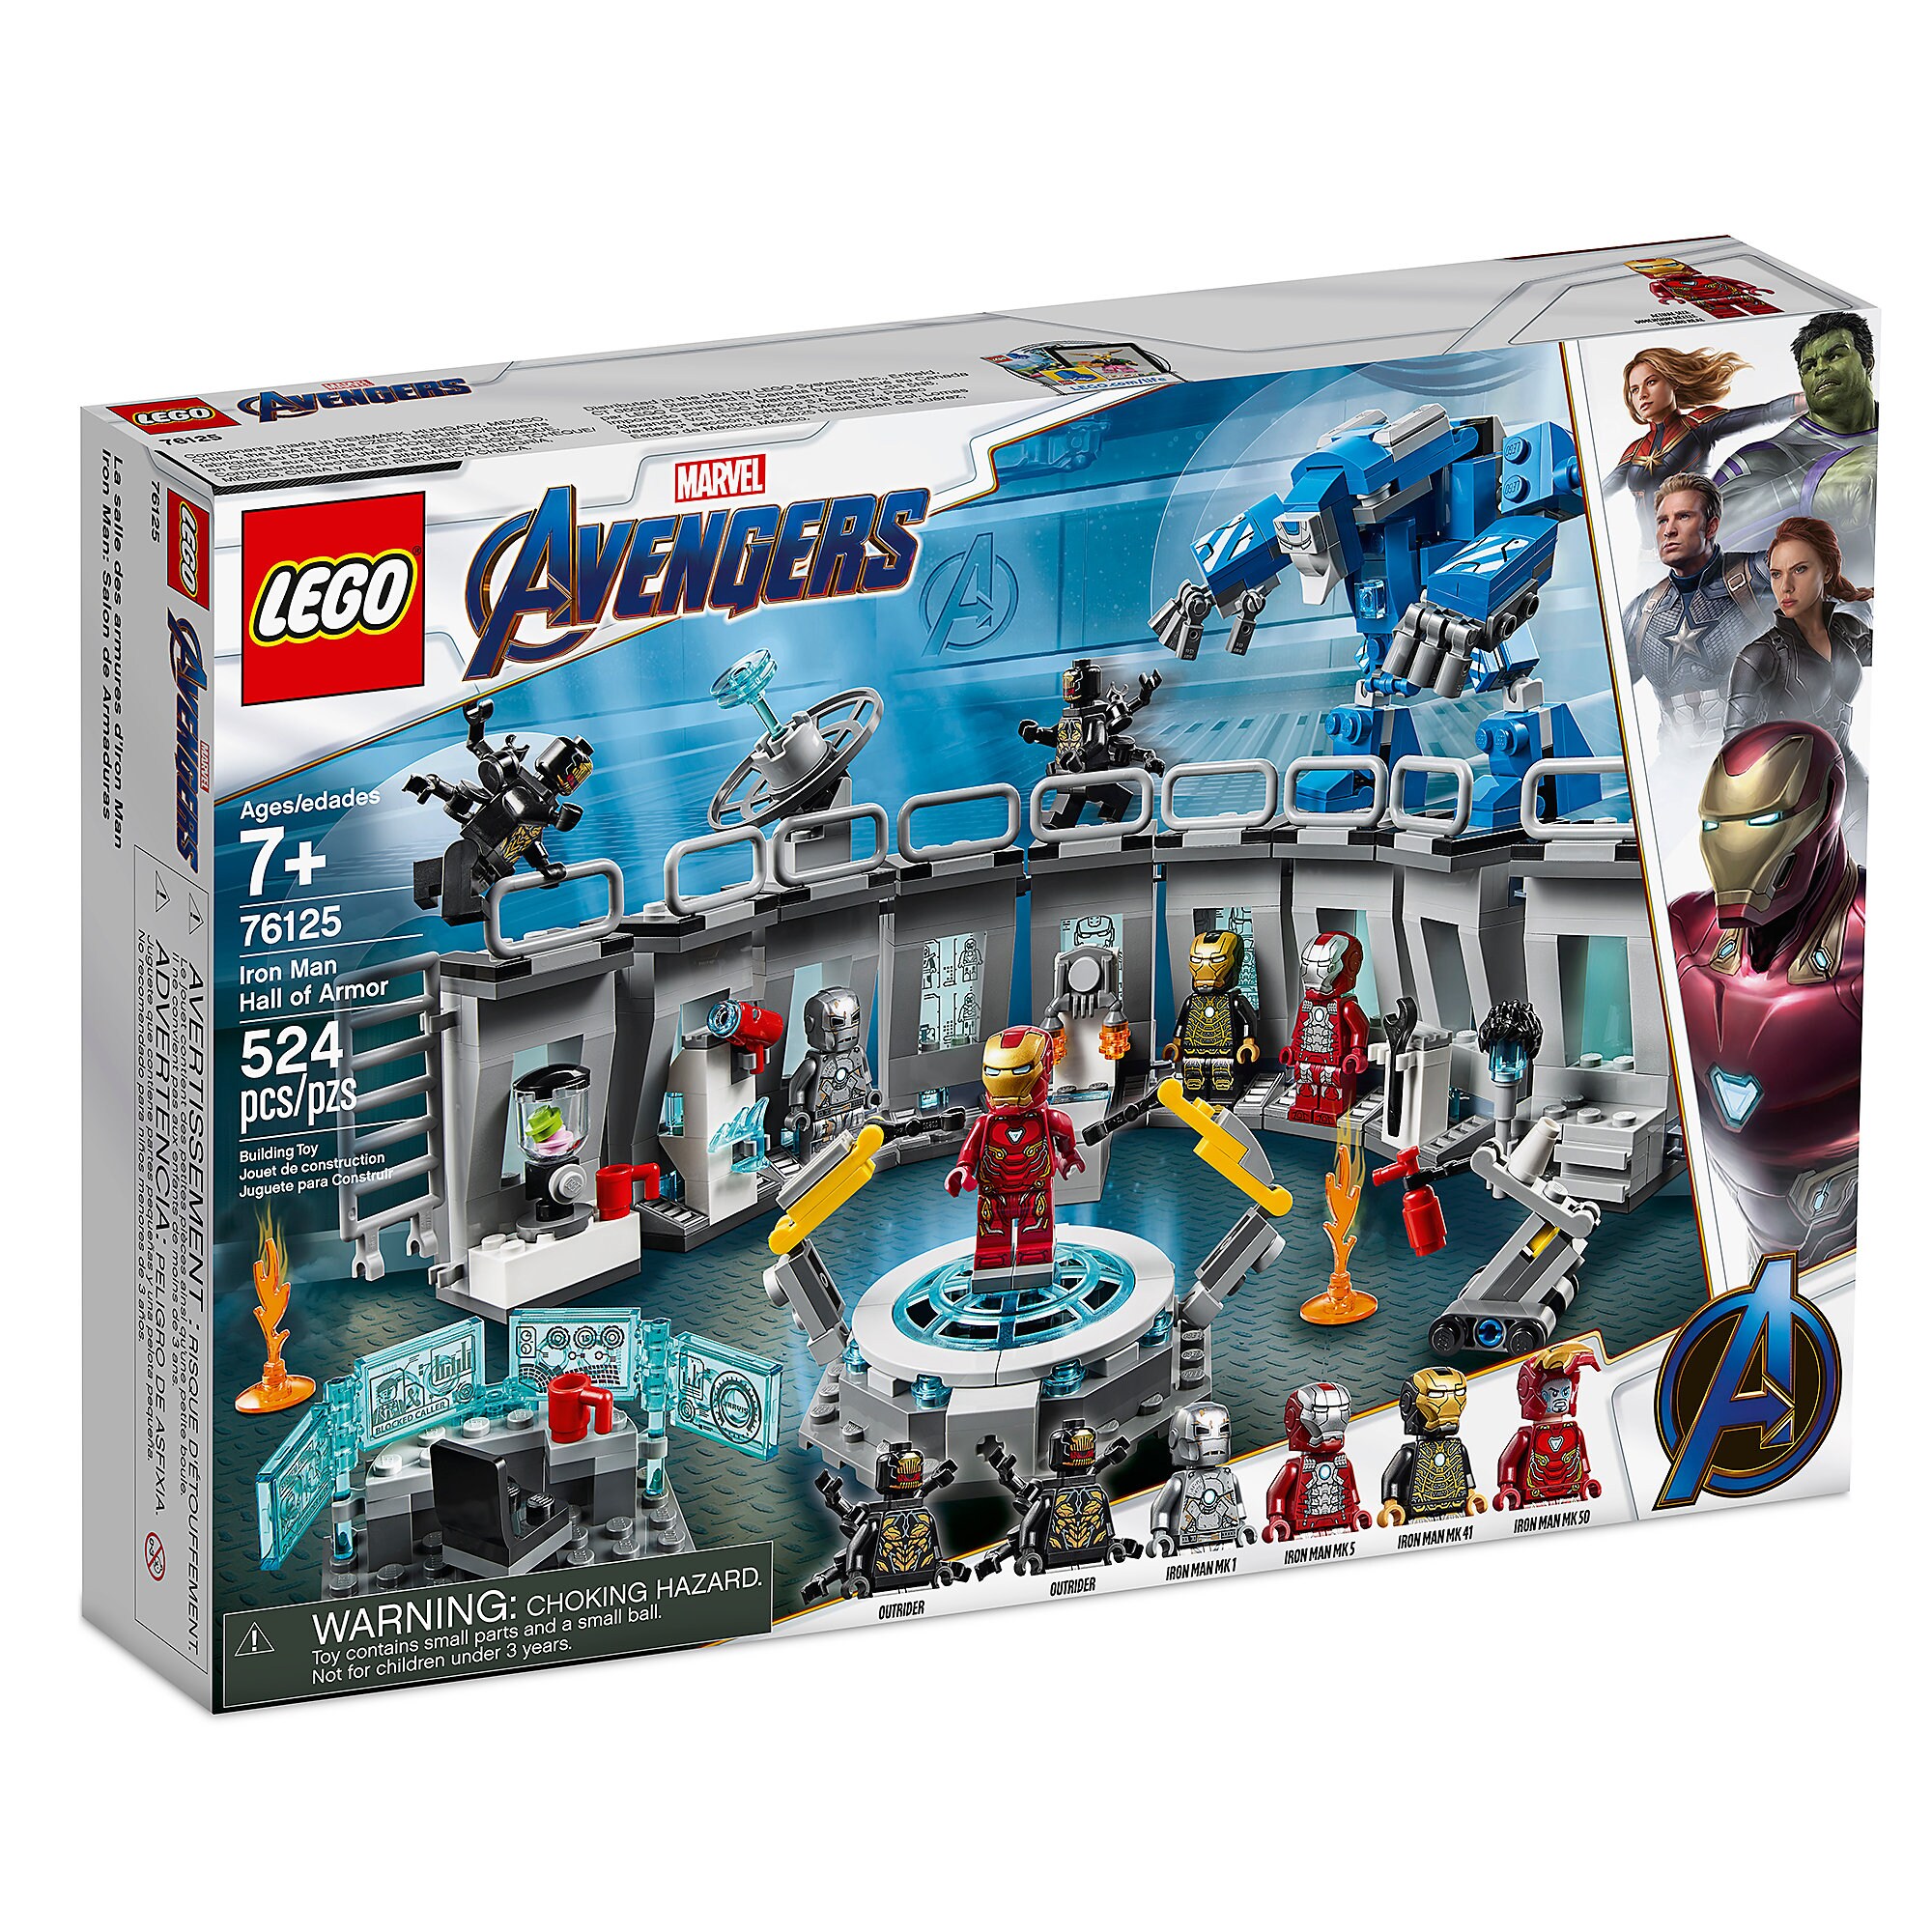 Iron Man Hall of Armor Play Set by LEGO - Marvel Avengers